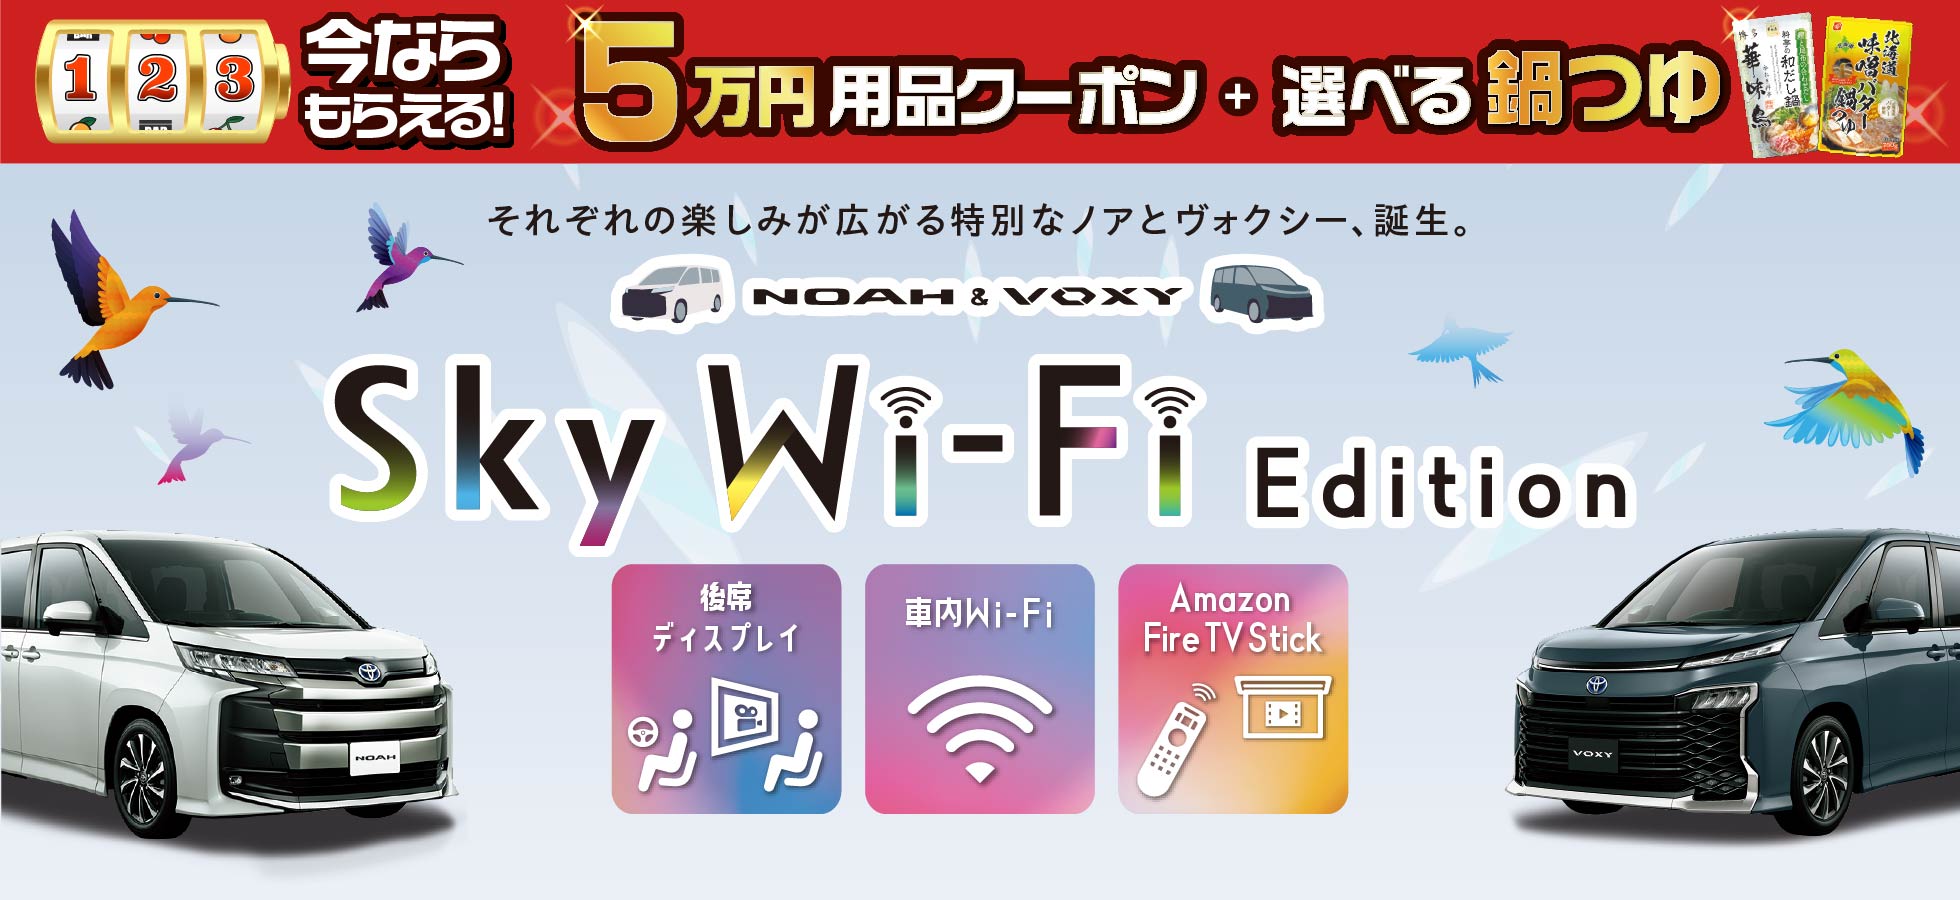 NOAH&VOXY Sky Wi-Fi Editionデビュー!